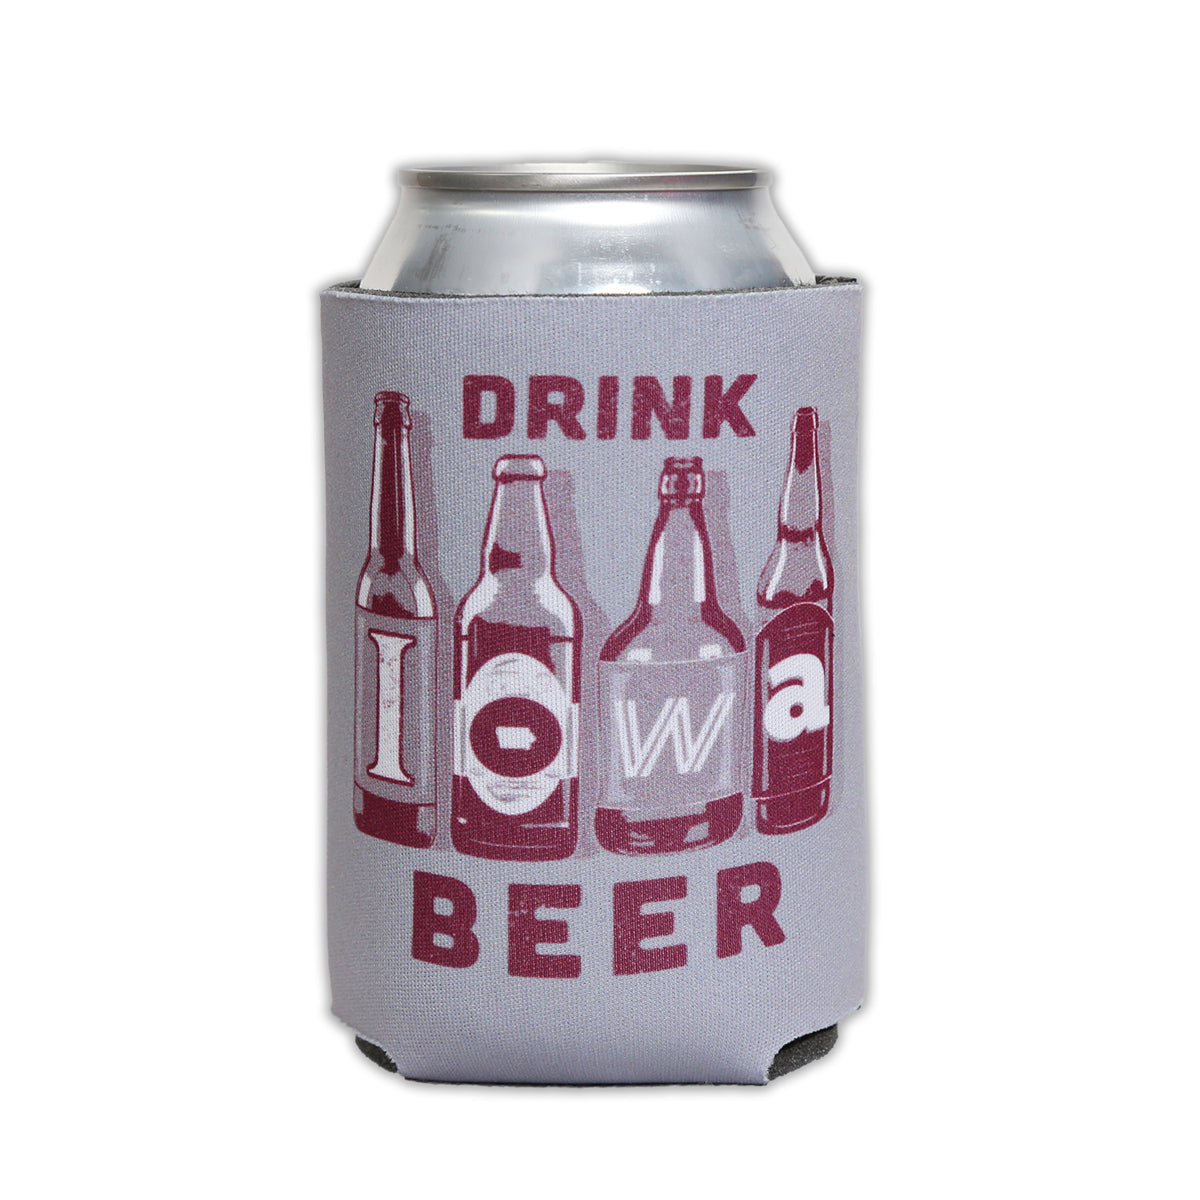 “Drink a little Drink” beer can koozie